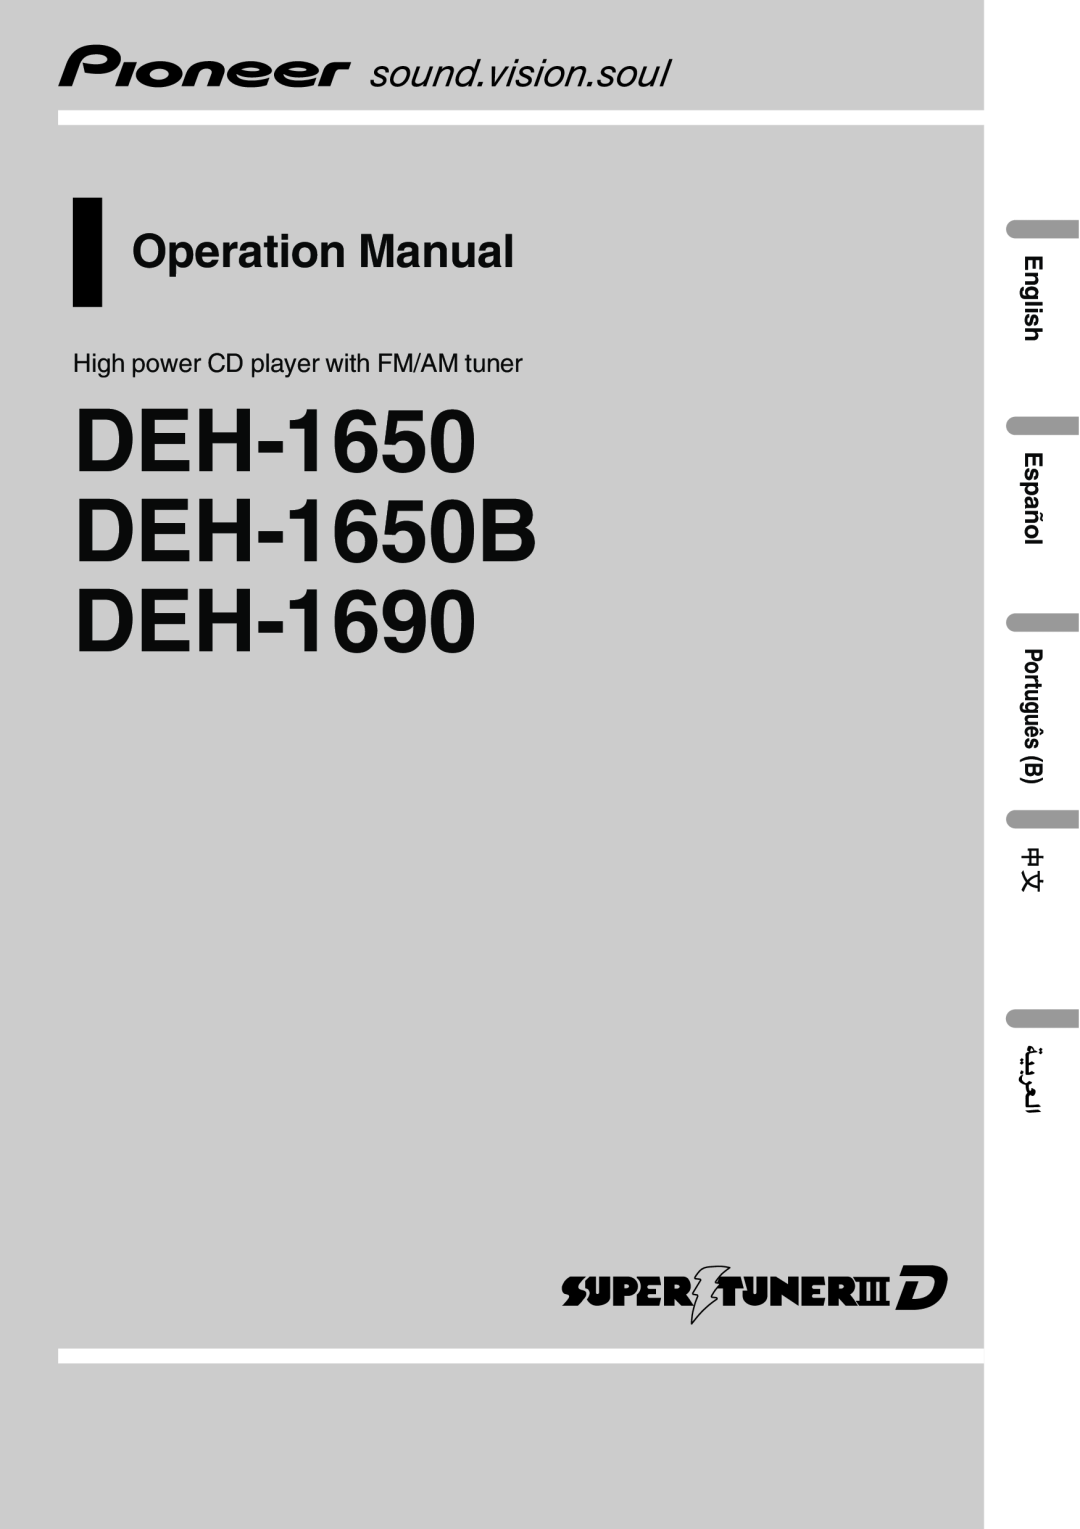 Pioneer DEH-1650B installation manual Installation, English, DIN Front/Rear-mount, DIN Front-mount, DIN Rear-mount, ± qJA 